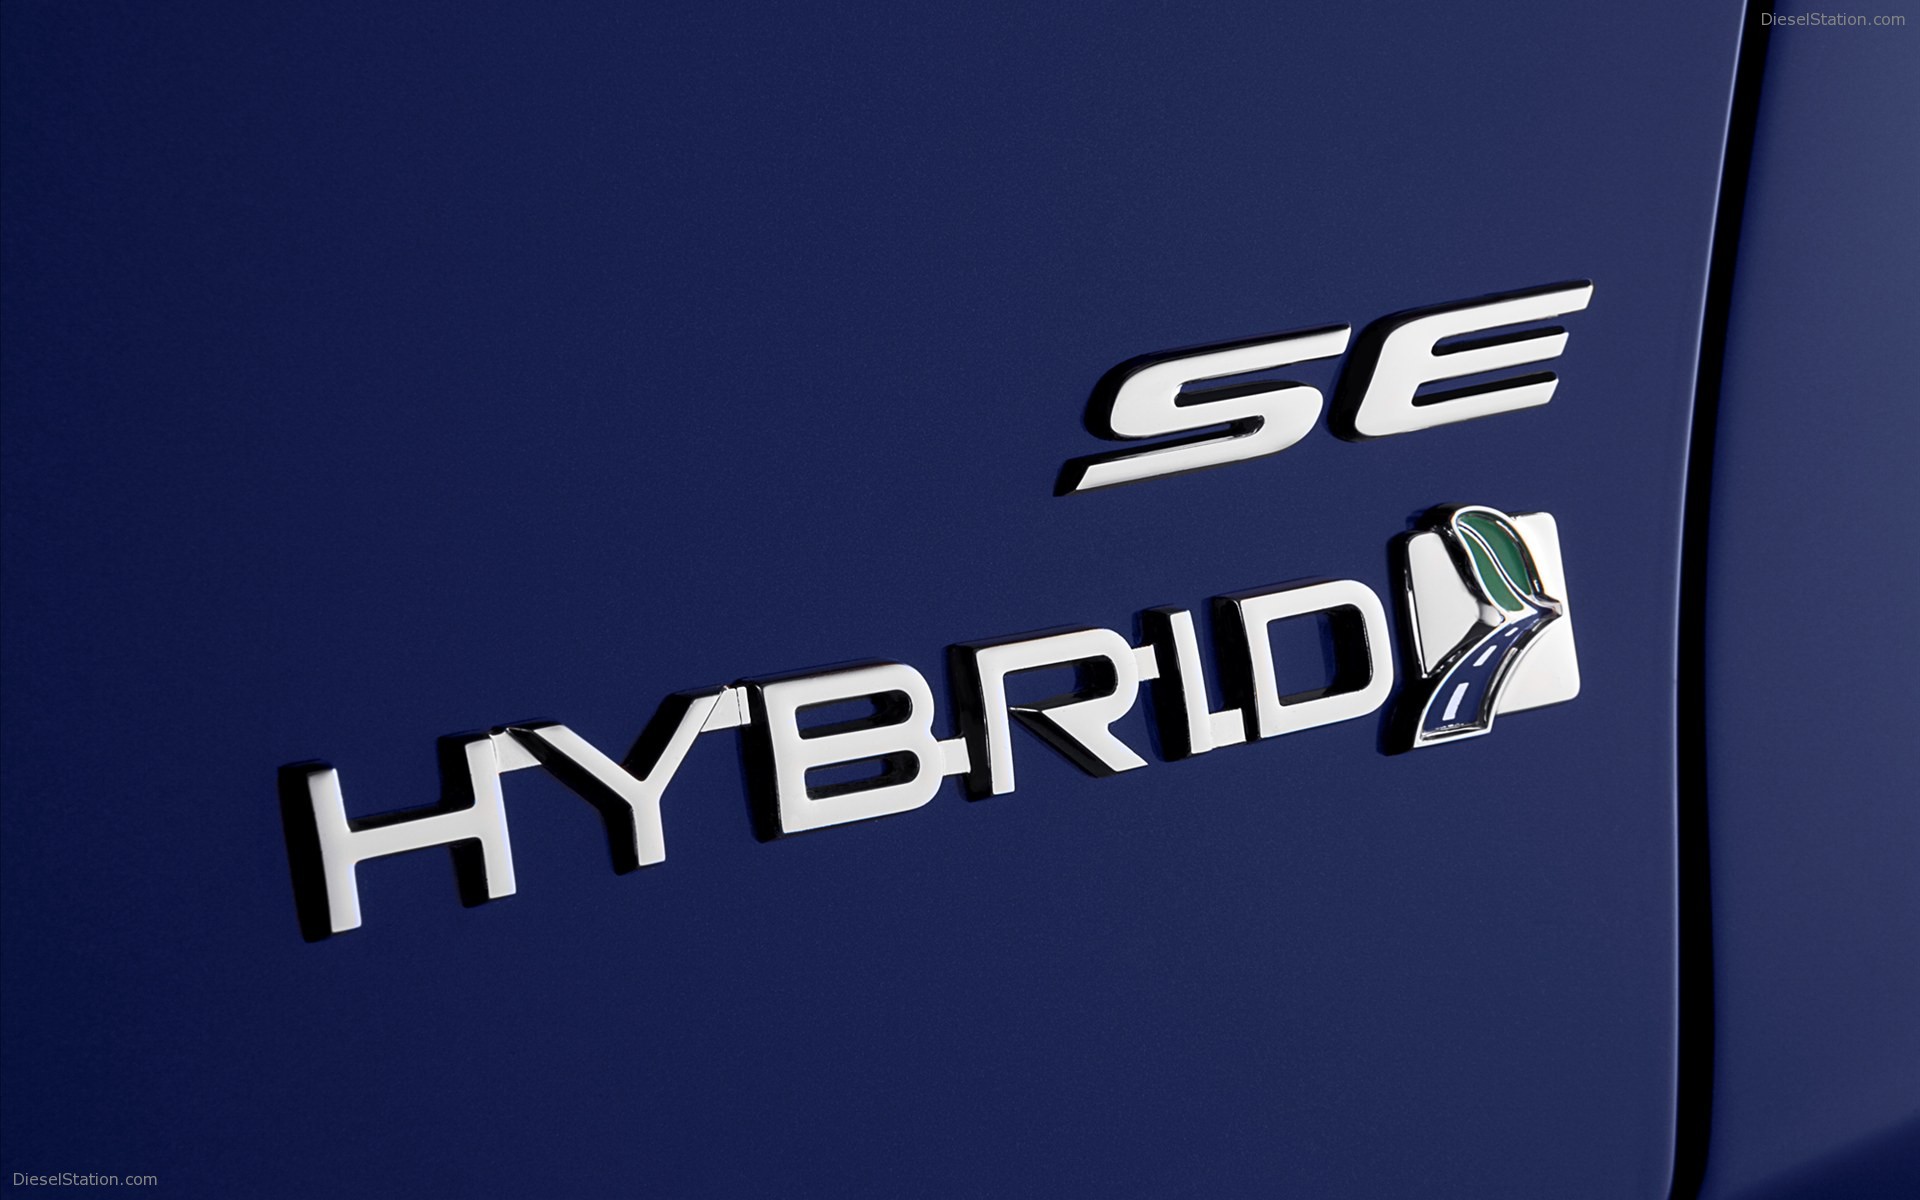 Ford-Fusion-Hybrid-2013 Badge